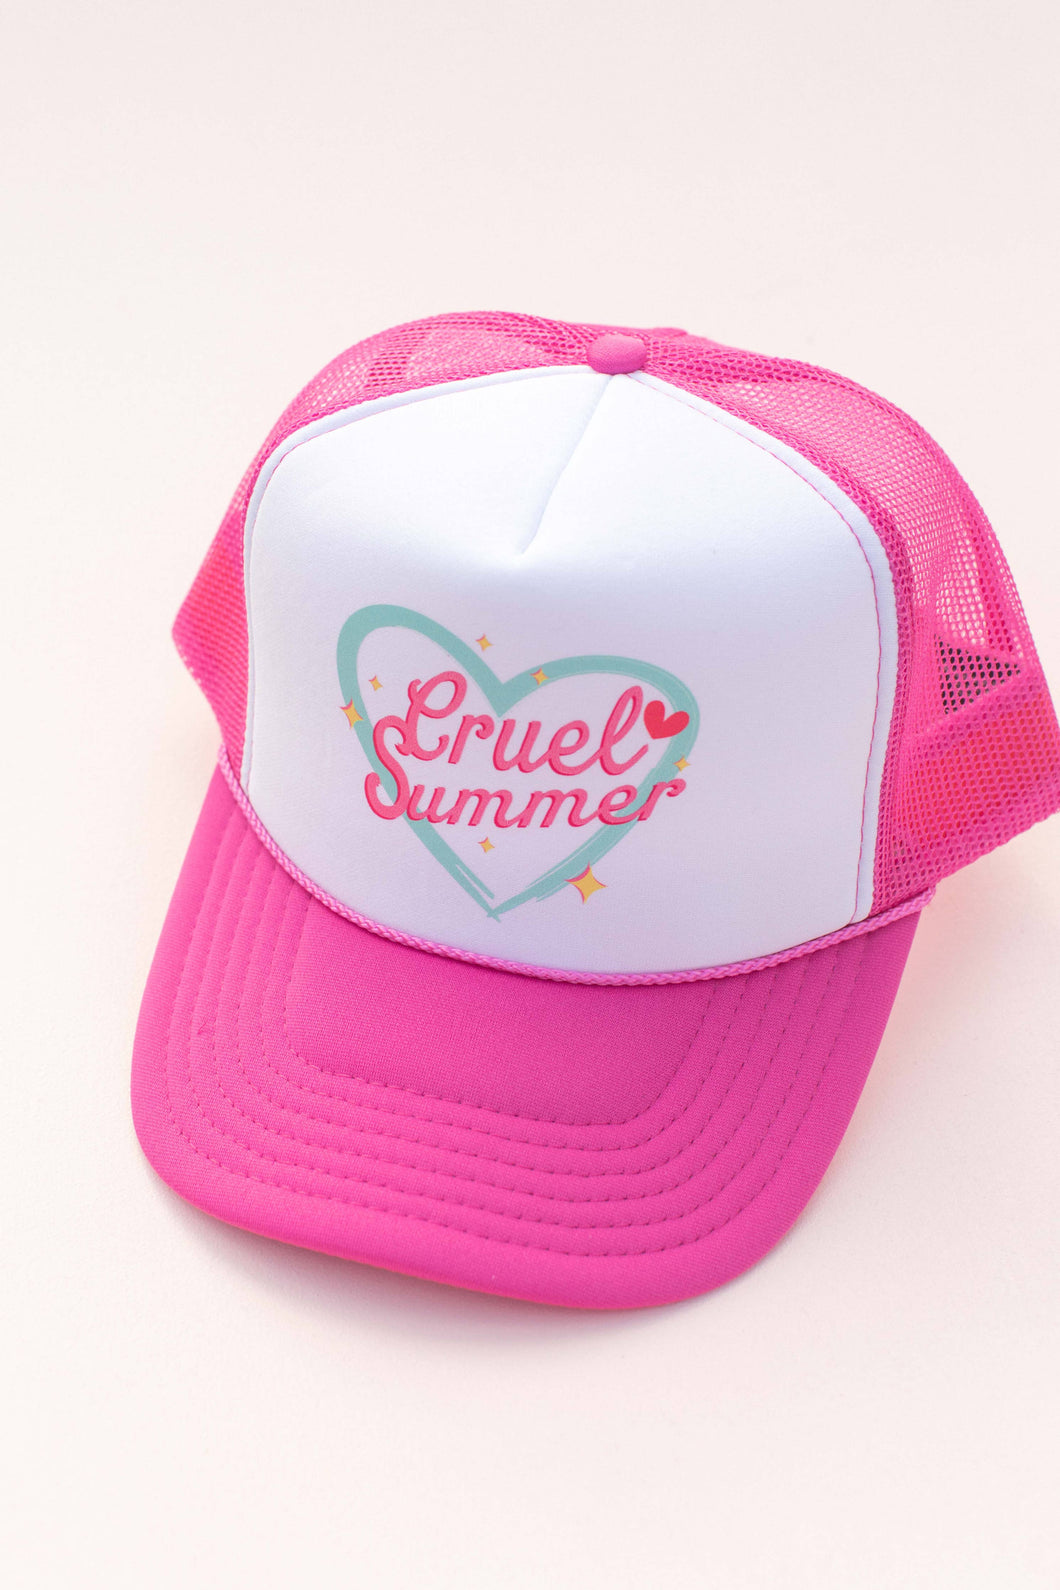 Cruel Summer Kids or Adults Trucker Hat Cap: Kids